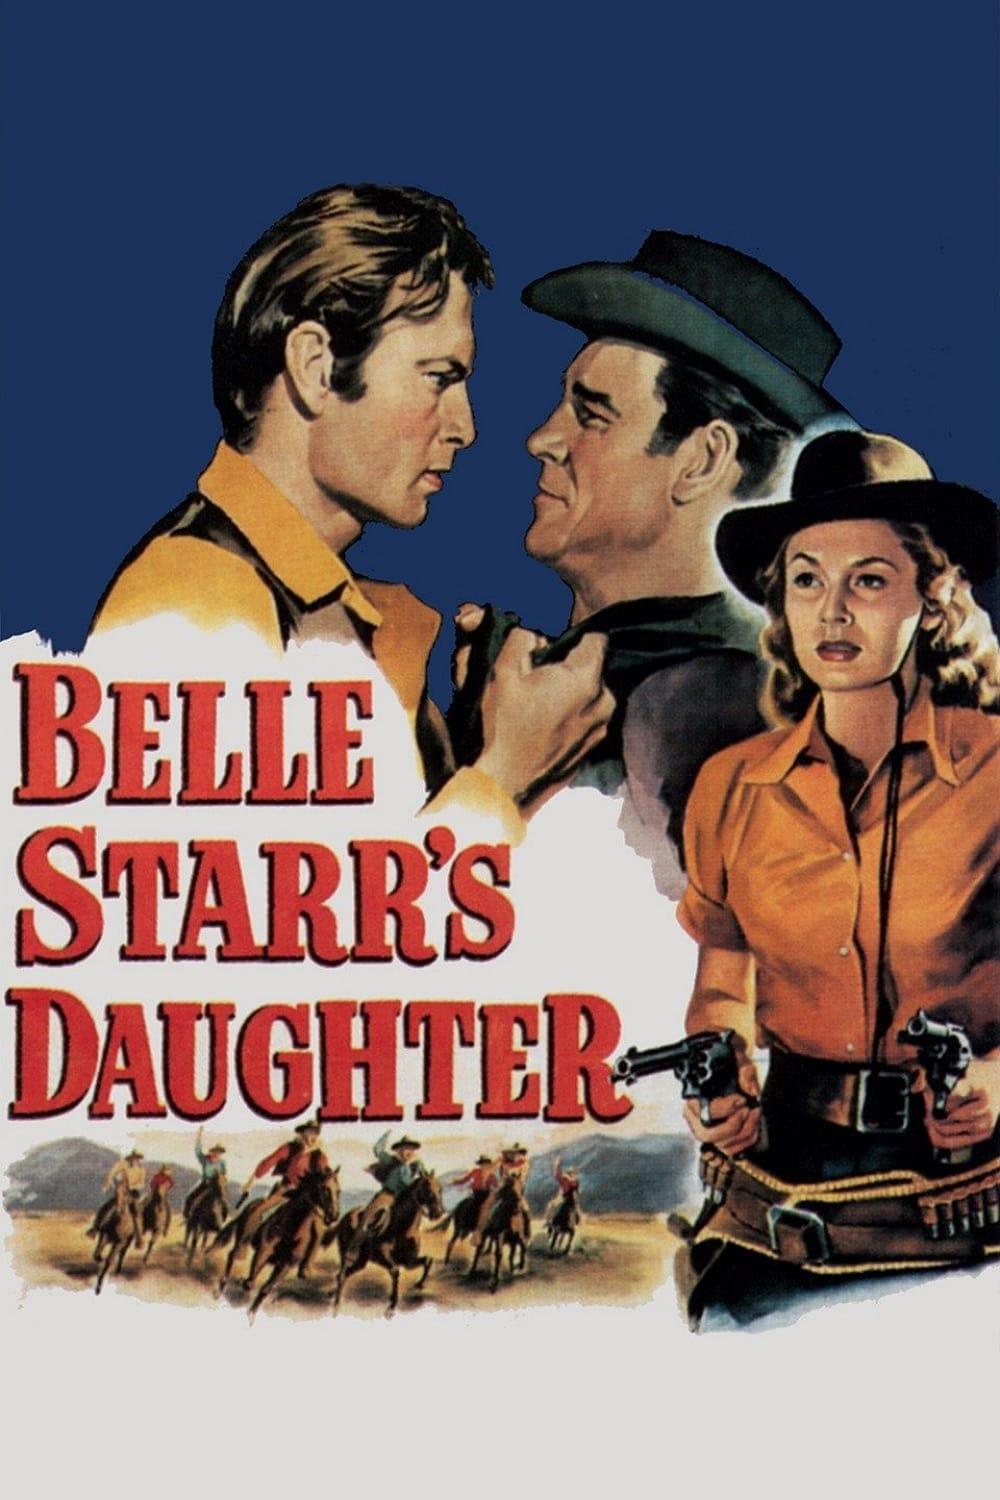 Belle Starr's Daughter poster